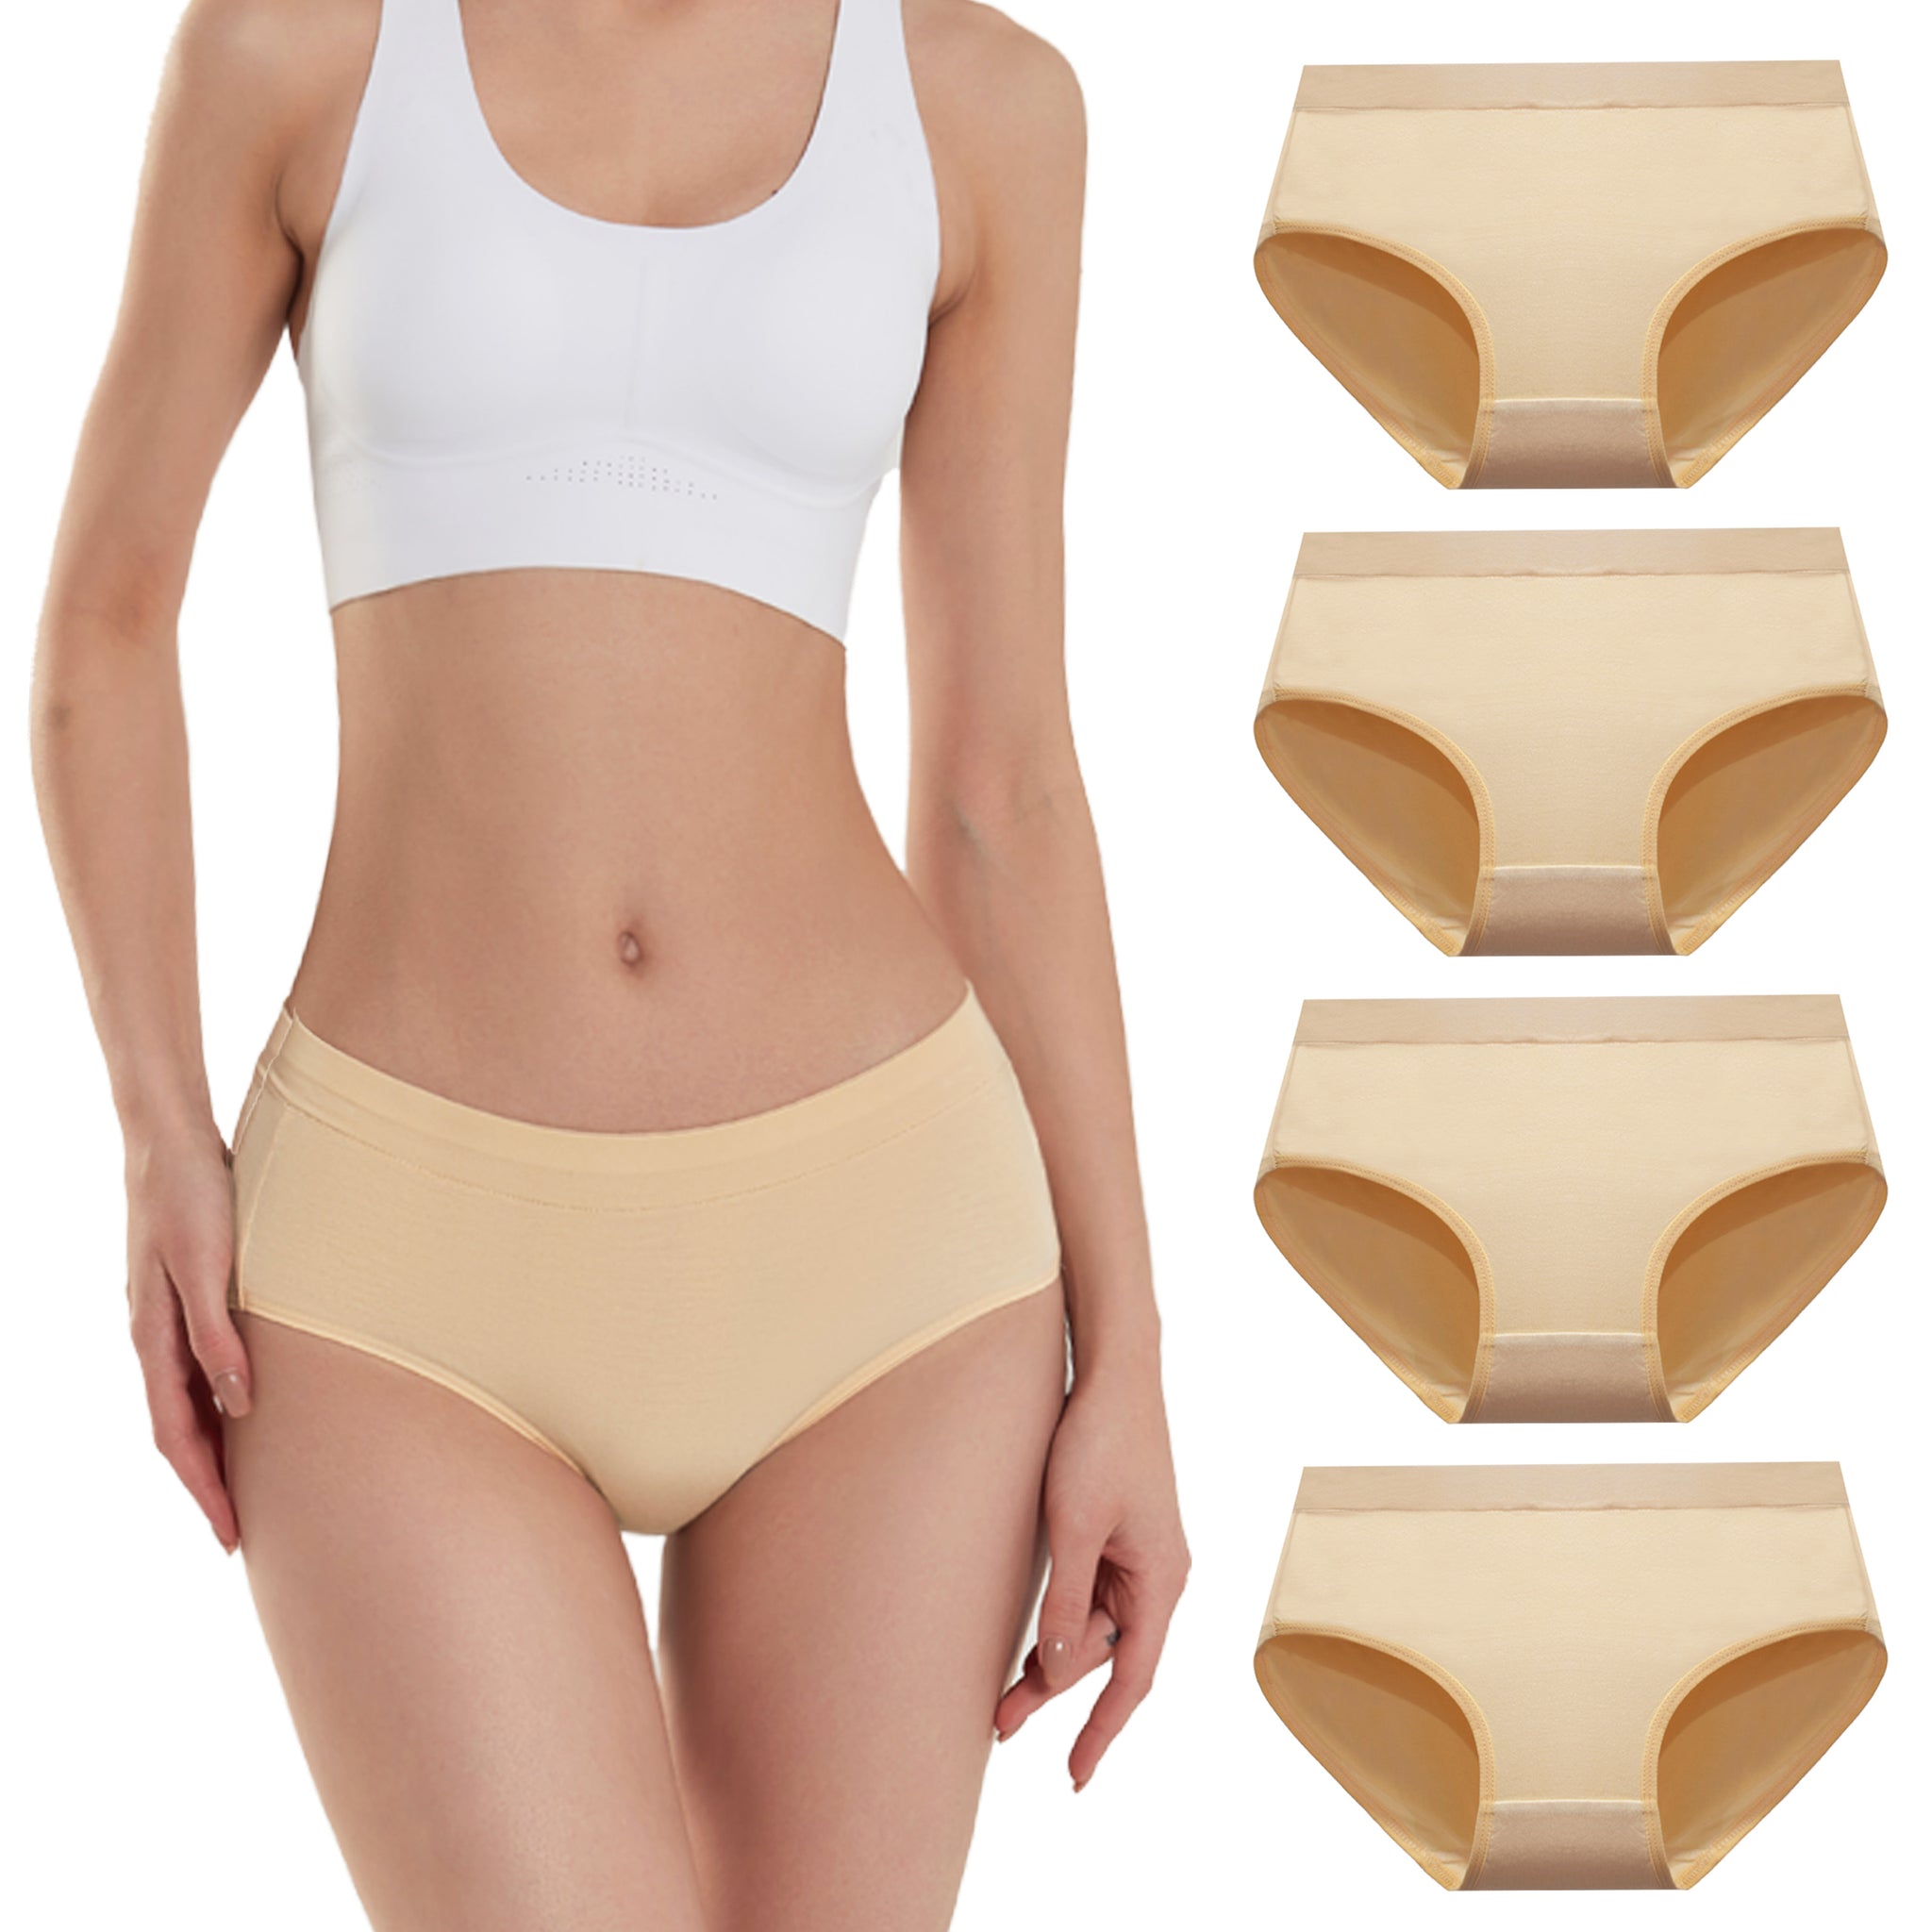 The best bamboo underwear for women